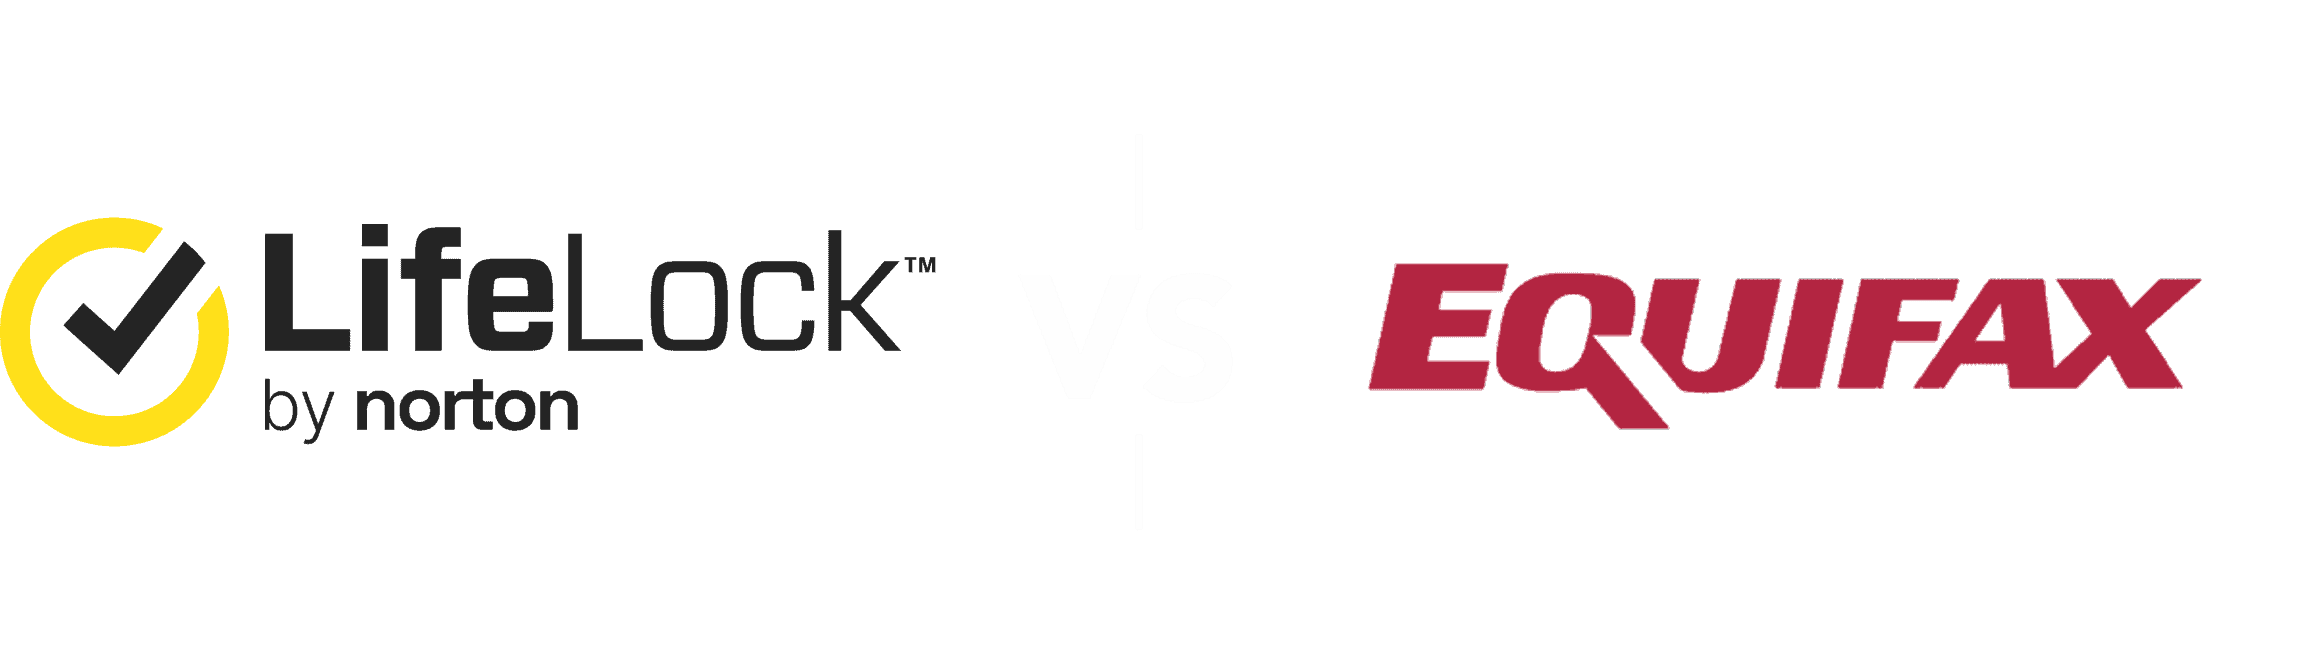 LifeLock vs Equifax Comparison